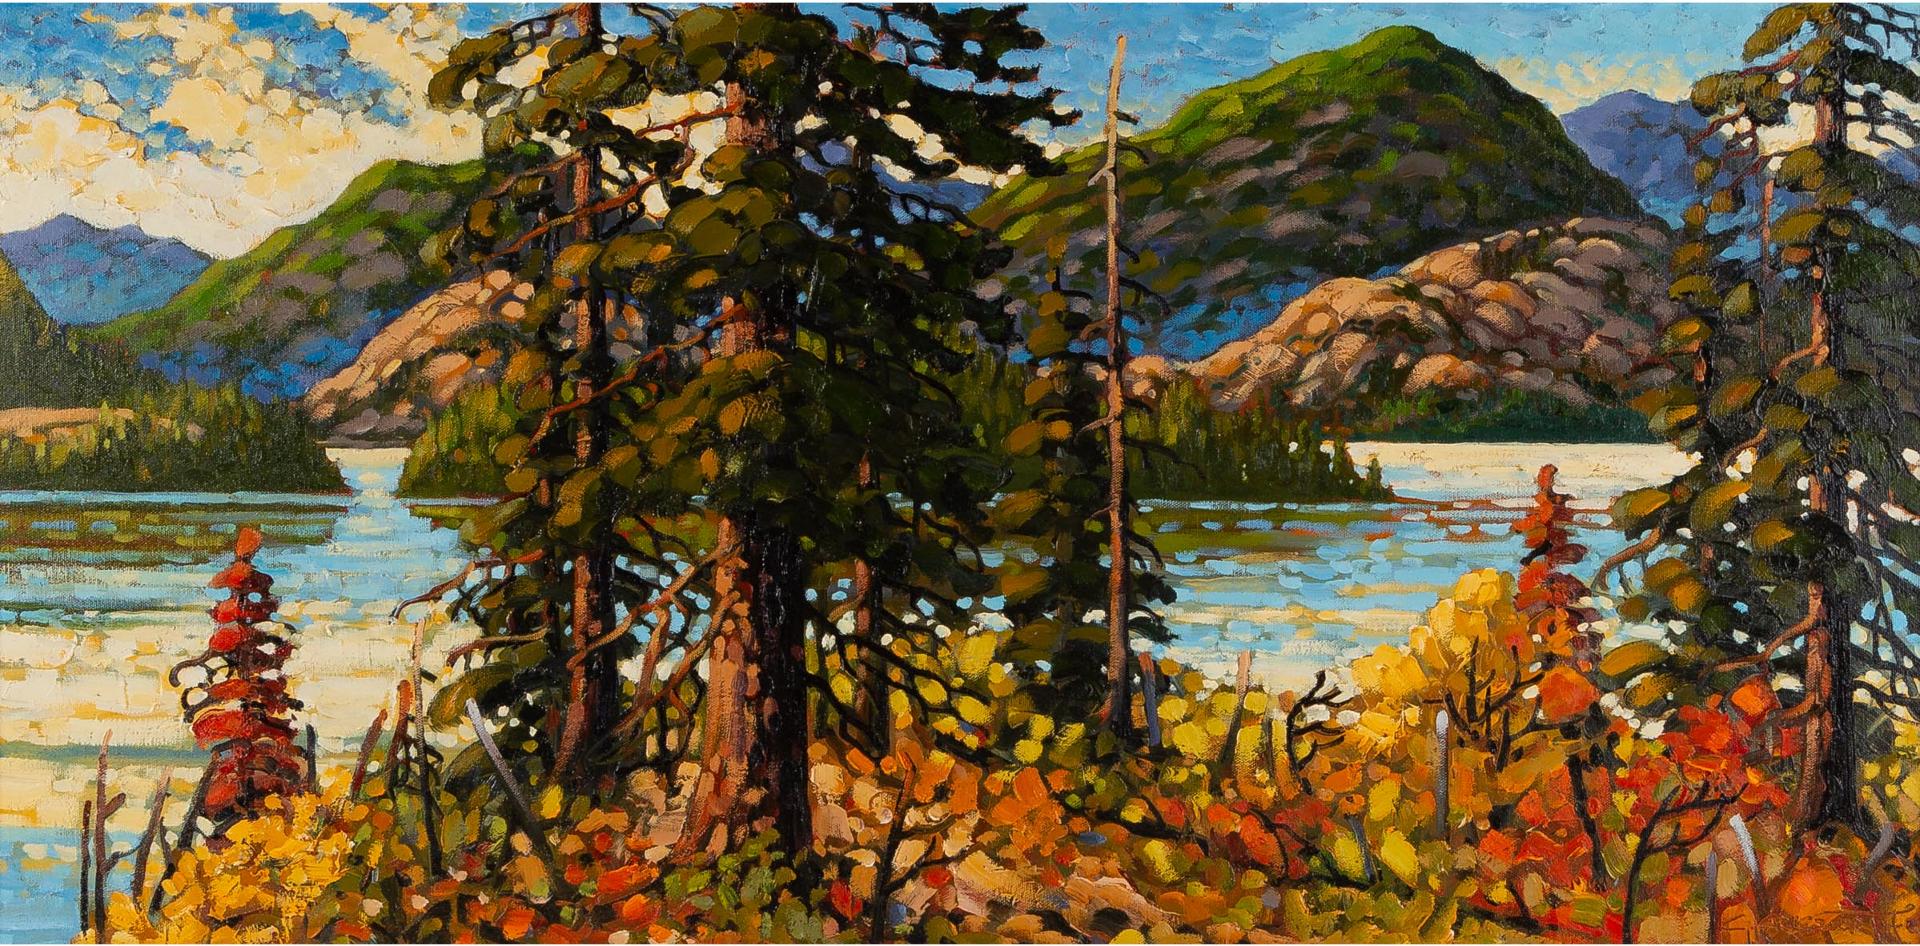 Rod Charlesworth (1955) - Slow Flow, Fraser River, B.C.